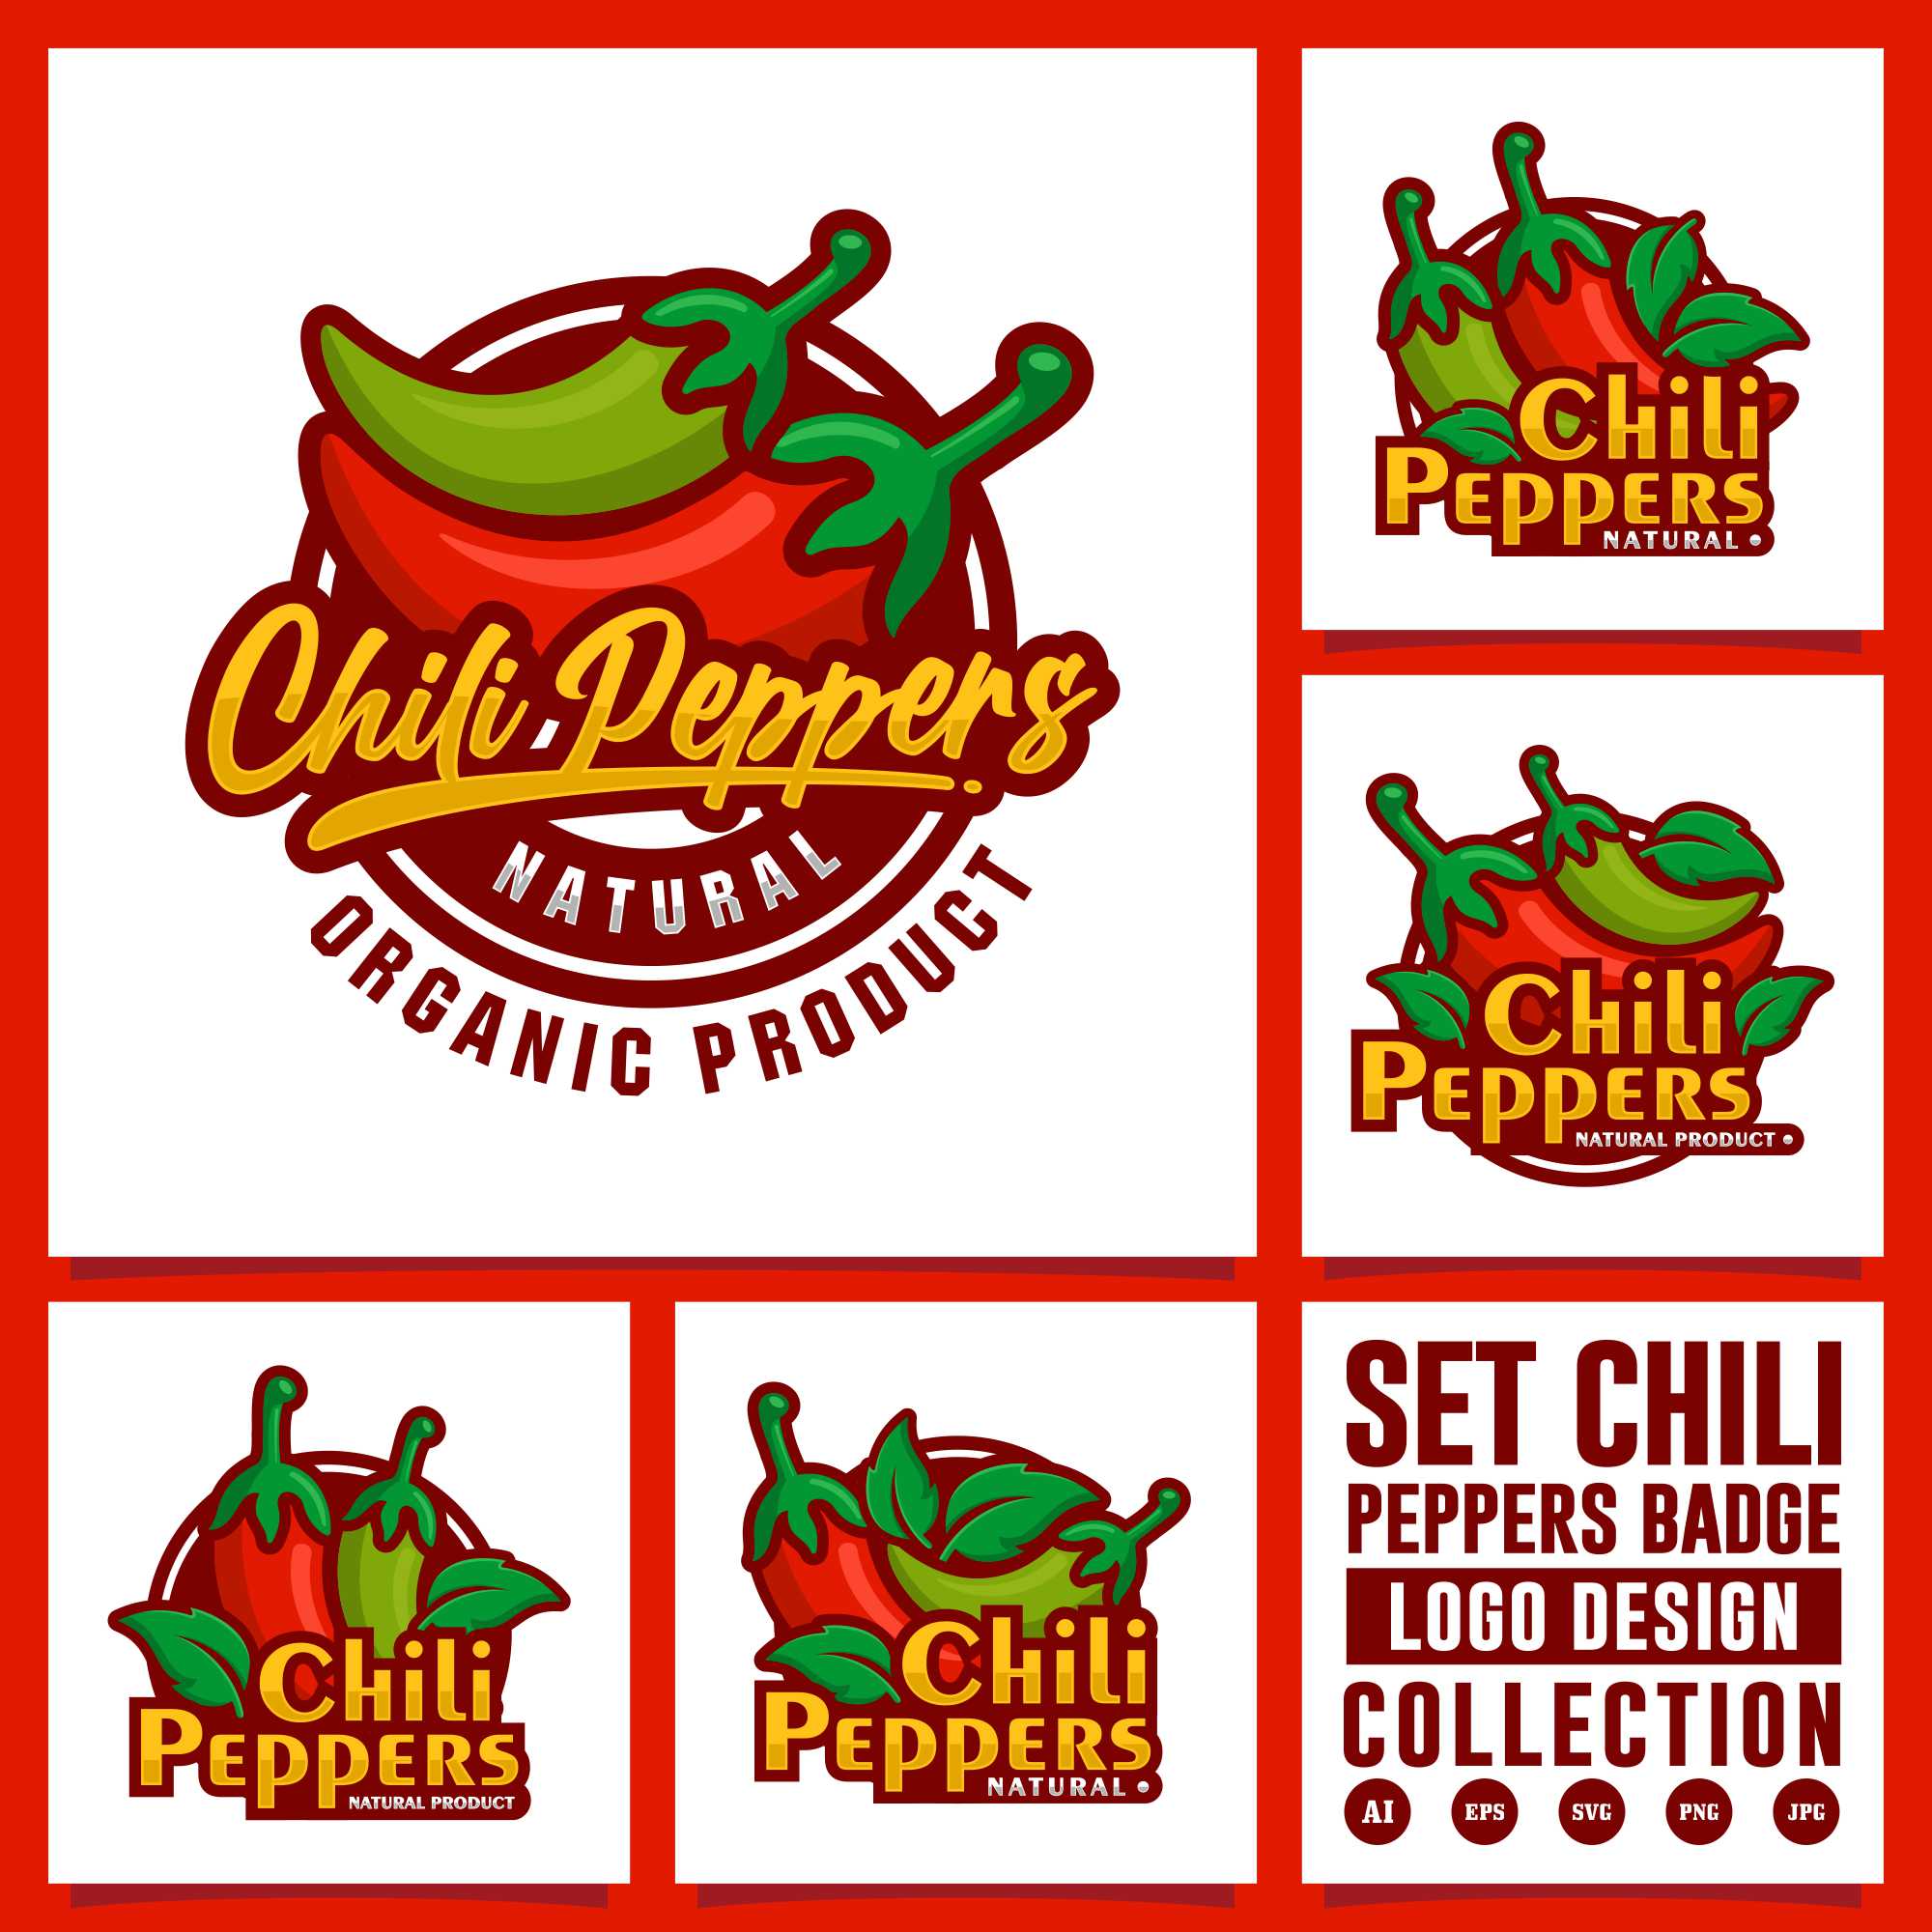 Set Chili pepper badge logo design collection - $6 cover image.